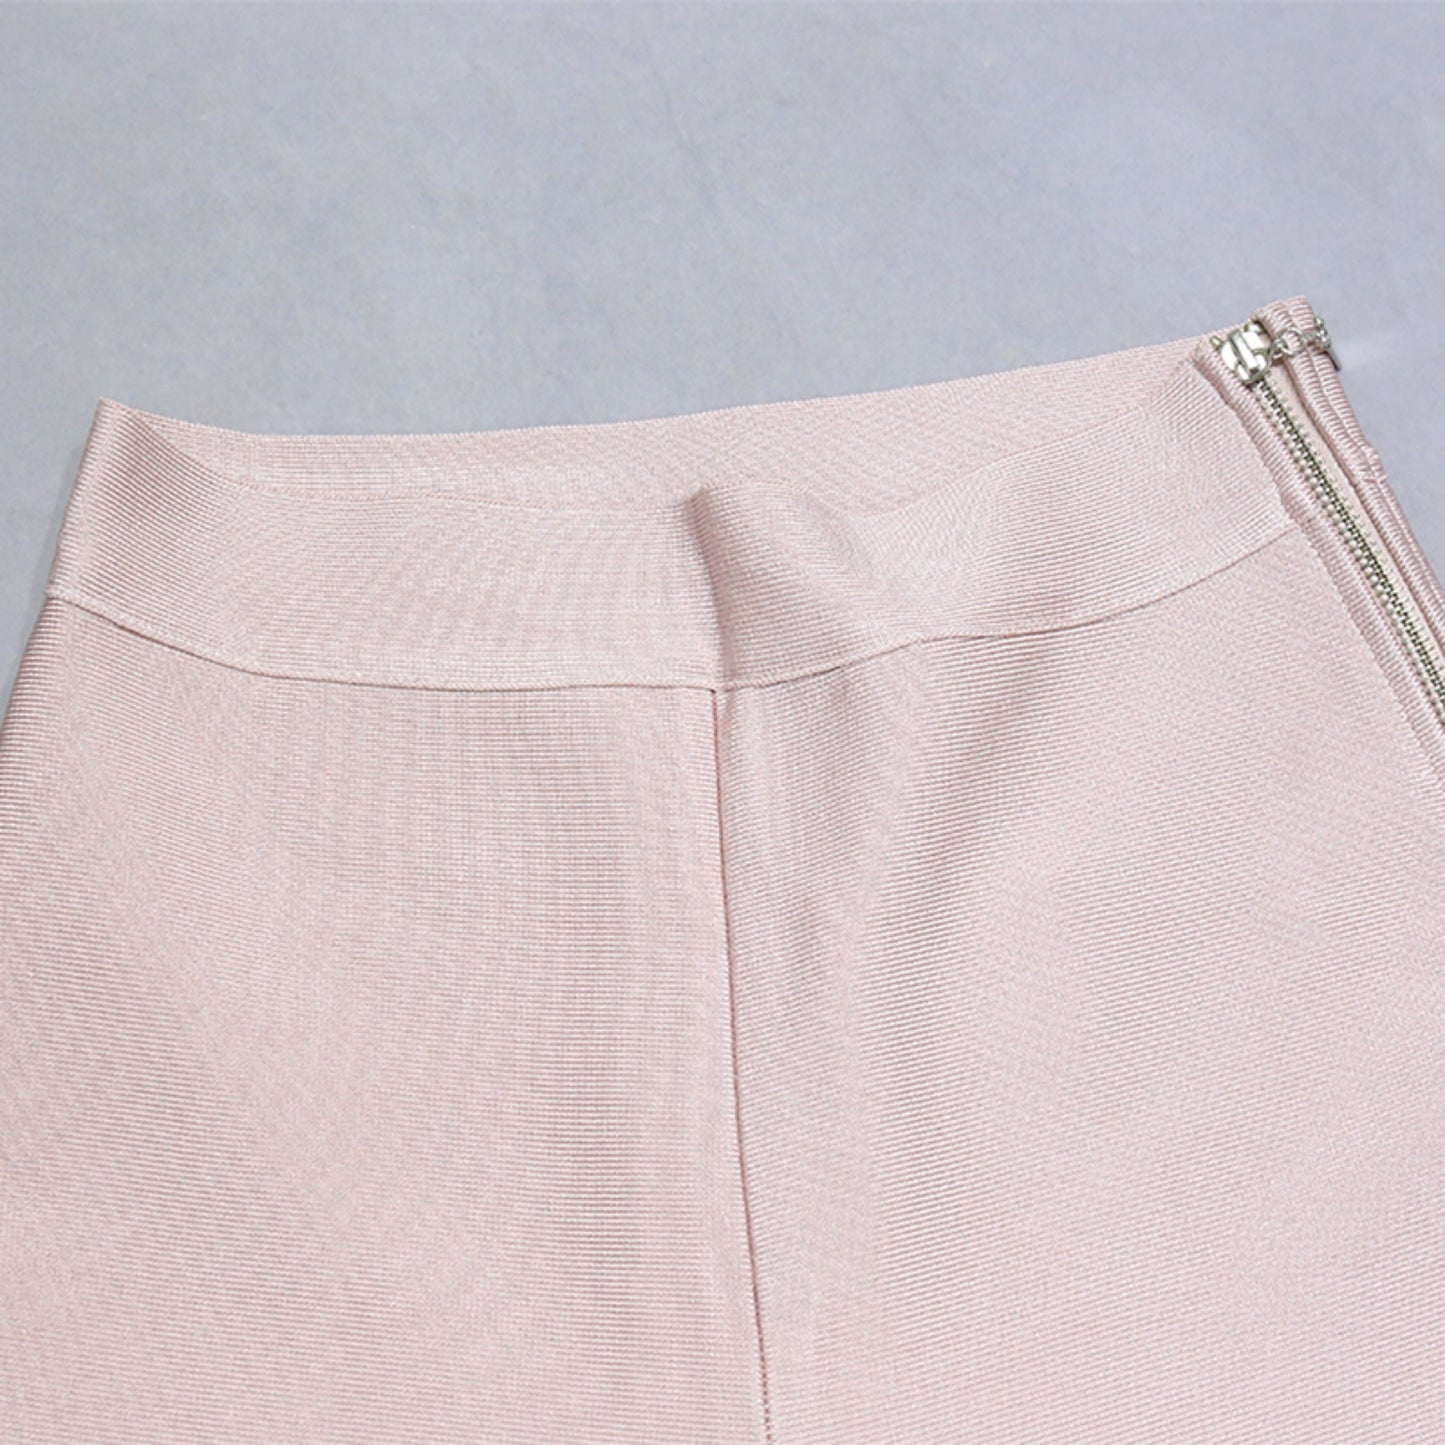 Skinny Dress Pants Zhuofei Clothes Co., Ltd.